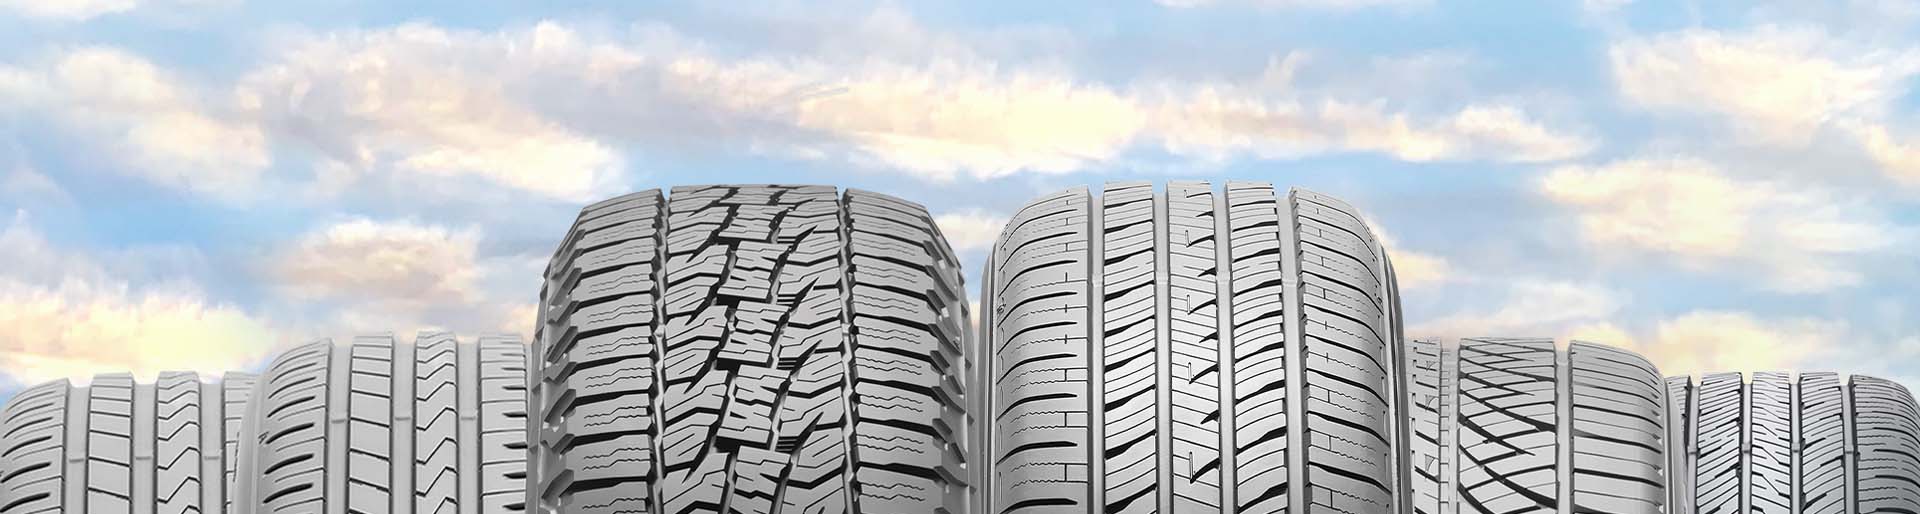 Falken Tires Consumer Rebates